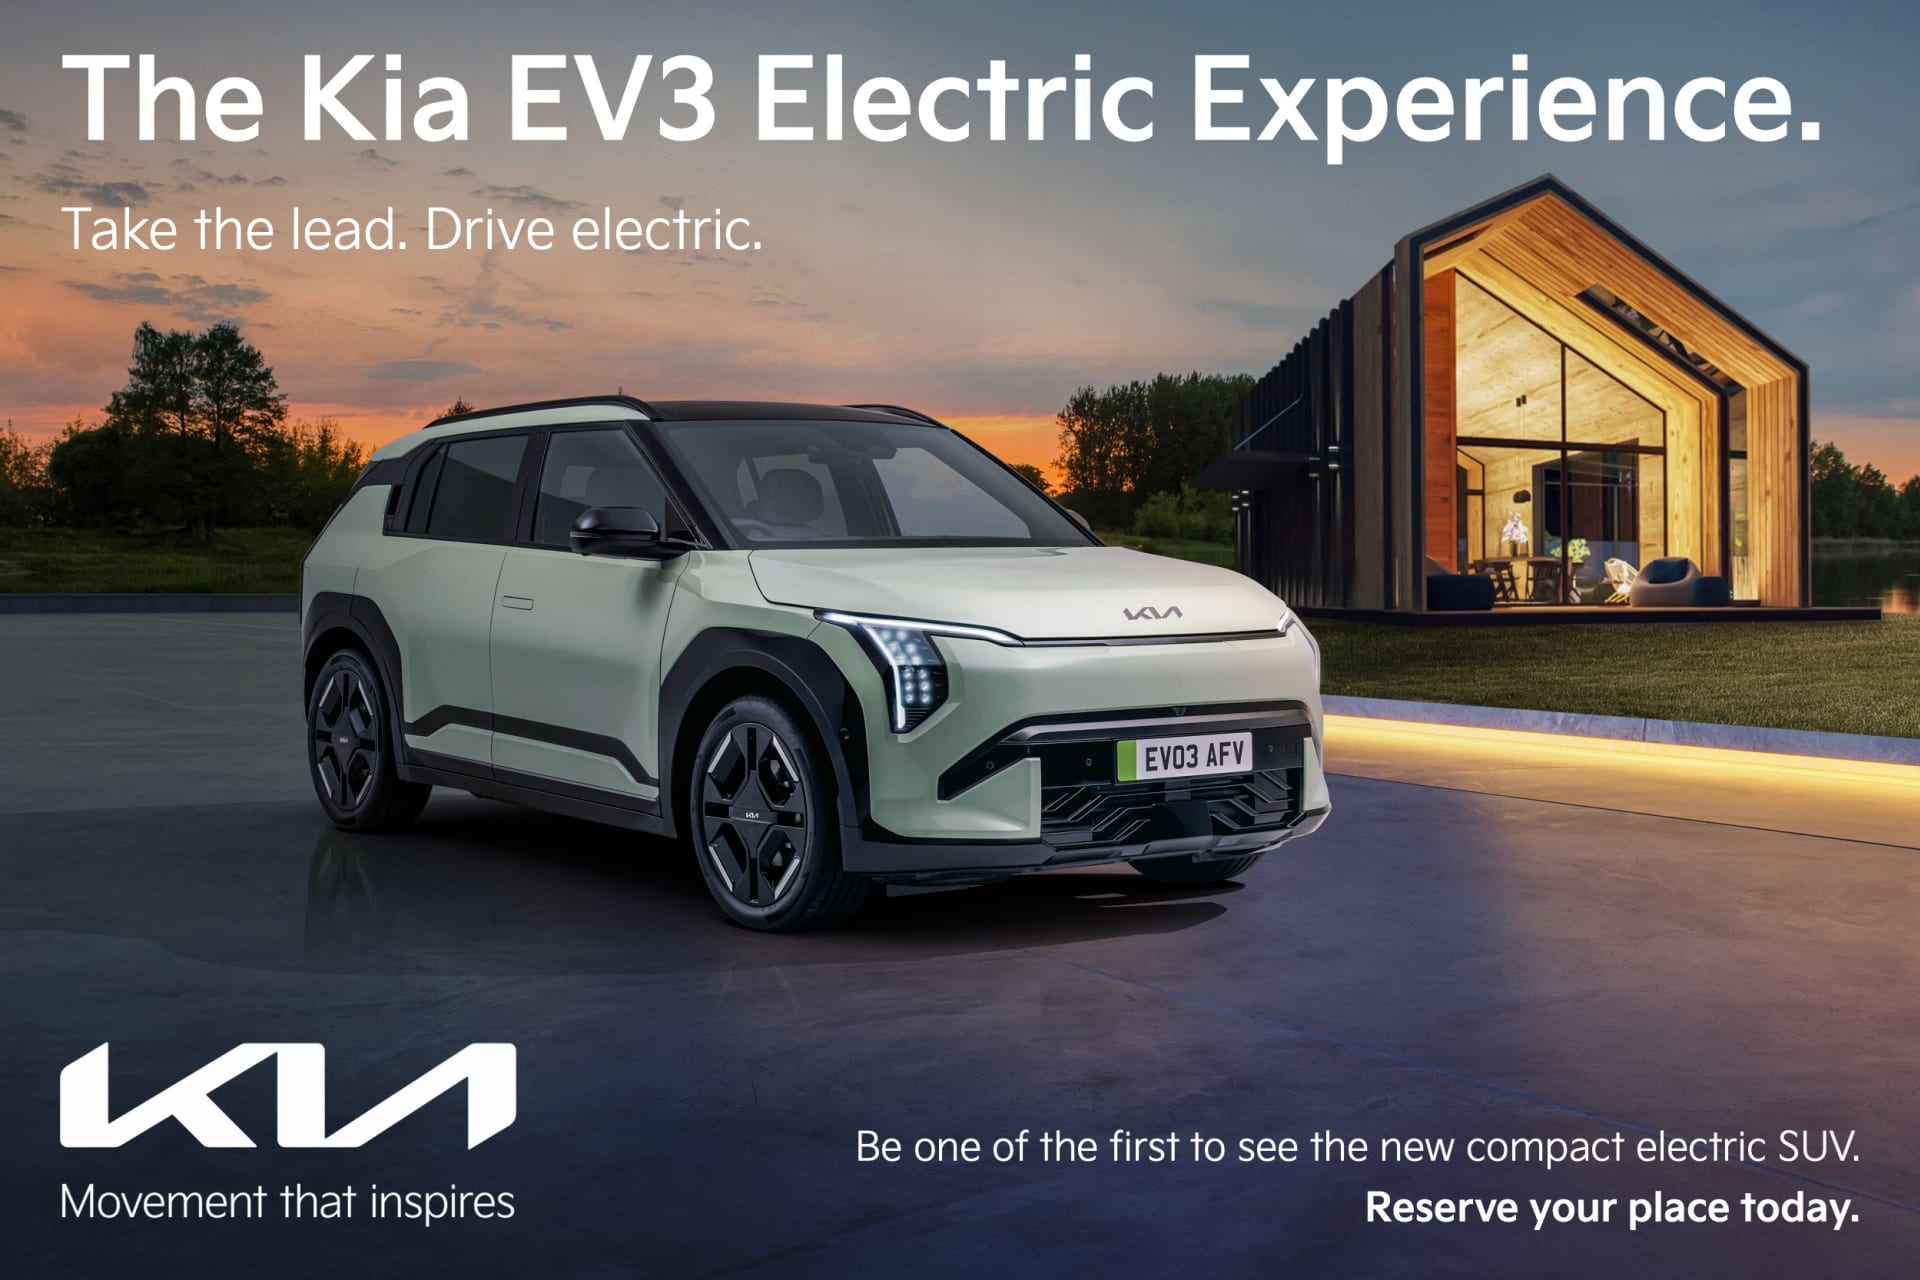 The Kia EV3 Electric Experience